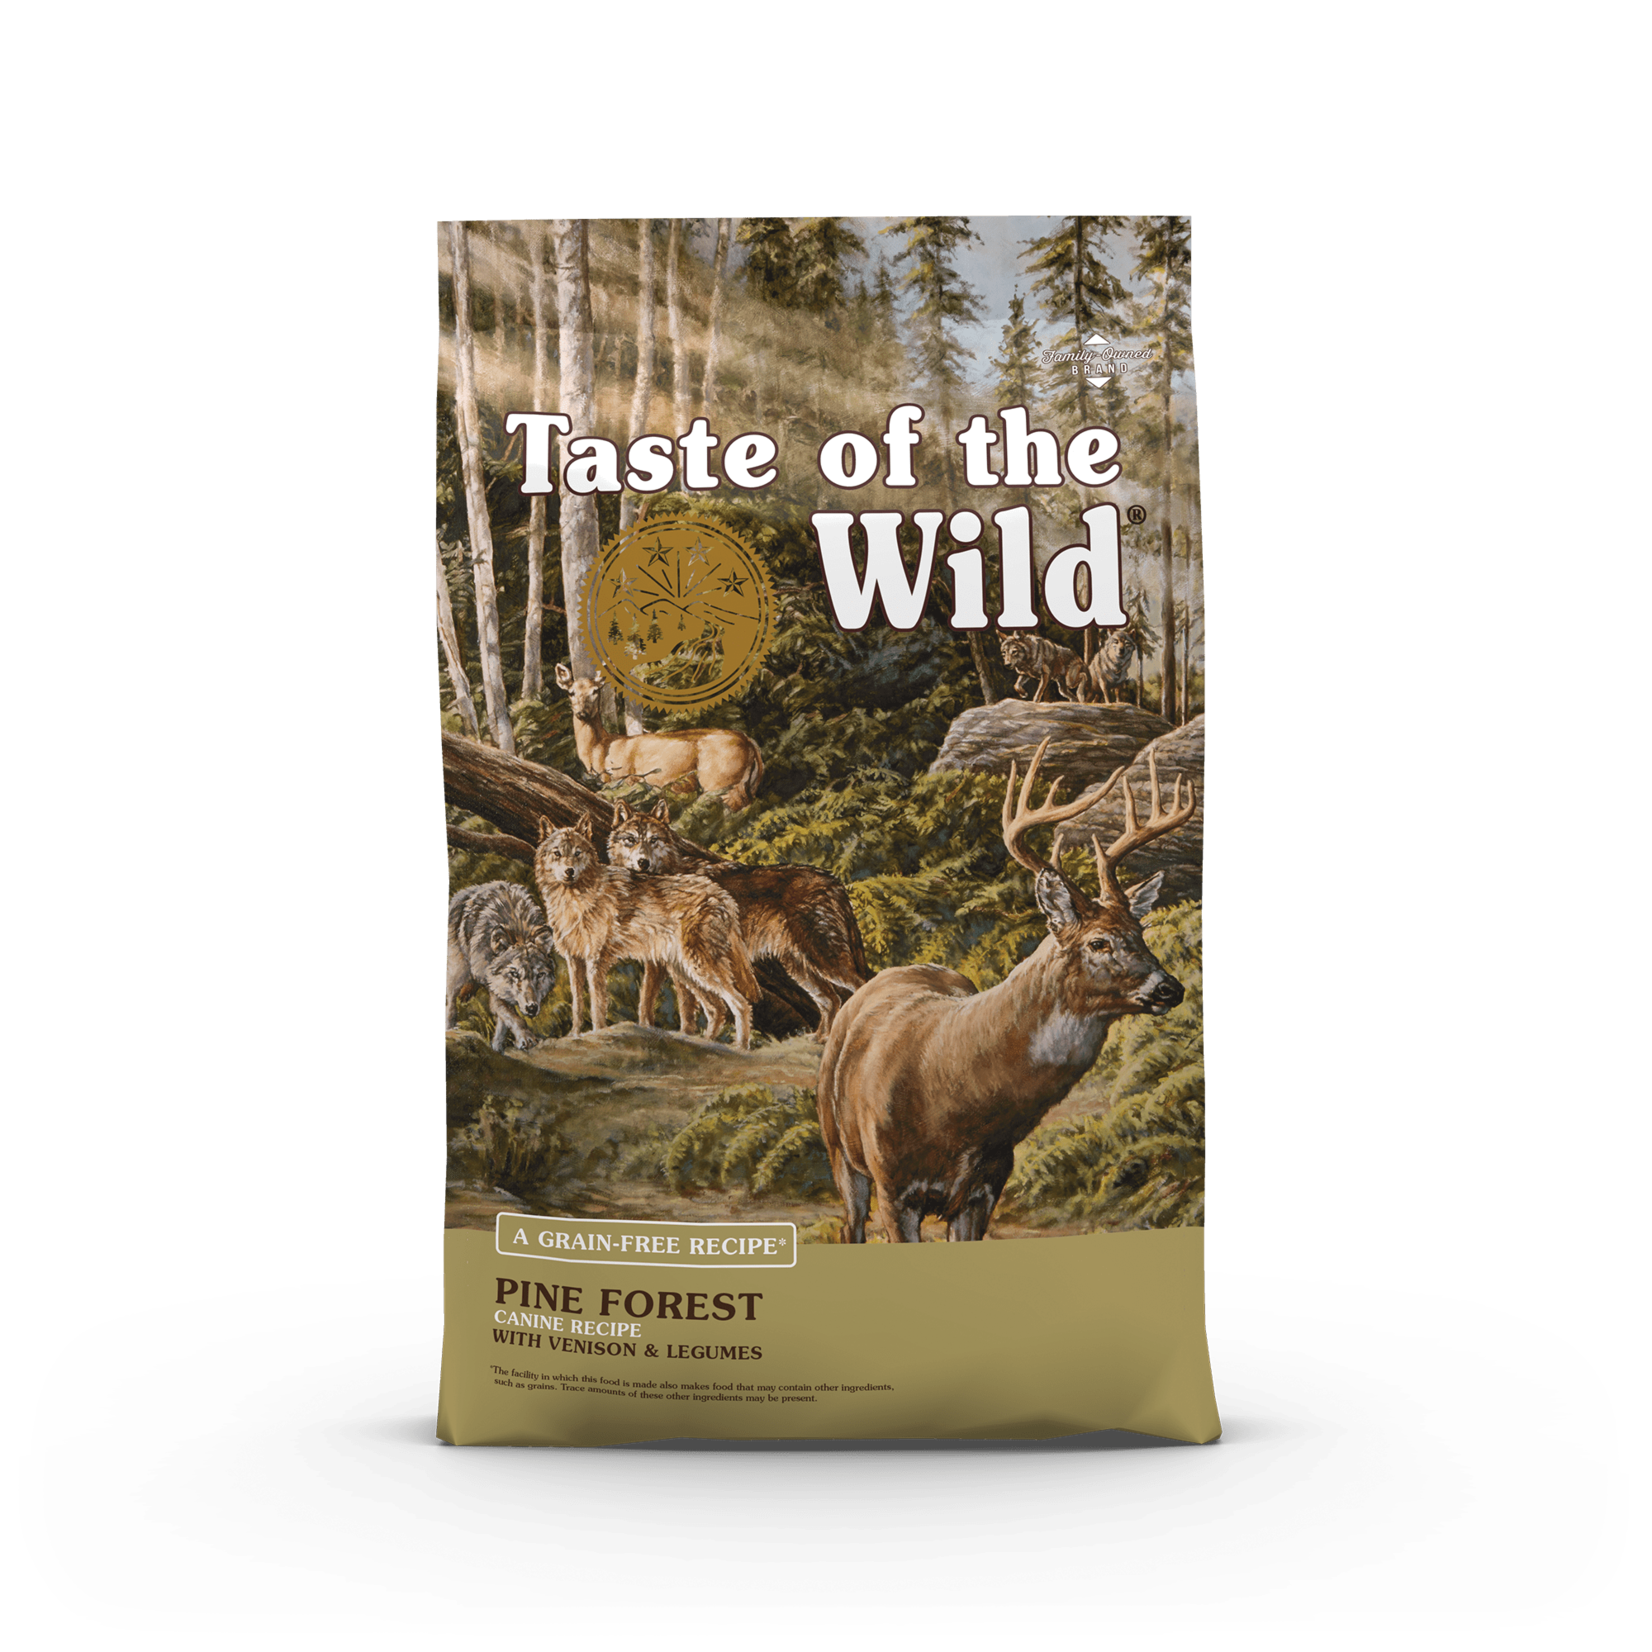 Taste of the Wild Taste of the Wild Pine Forest 28lb